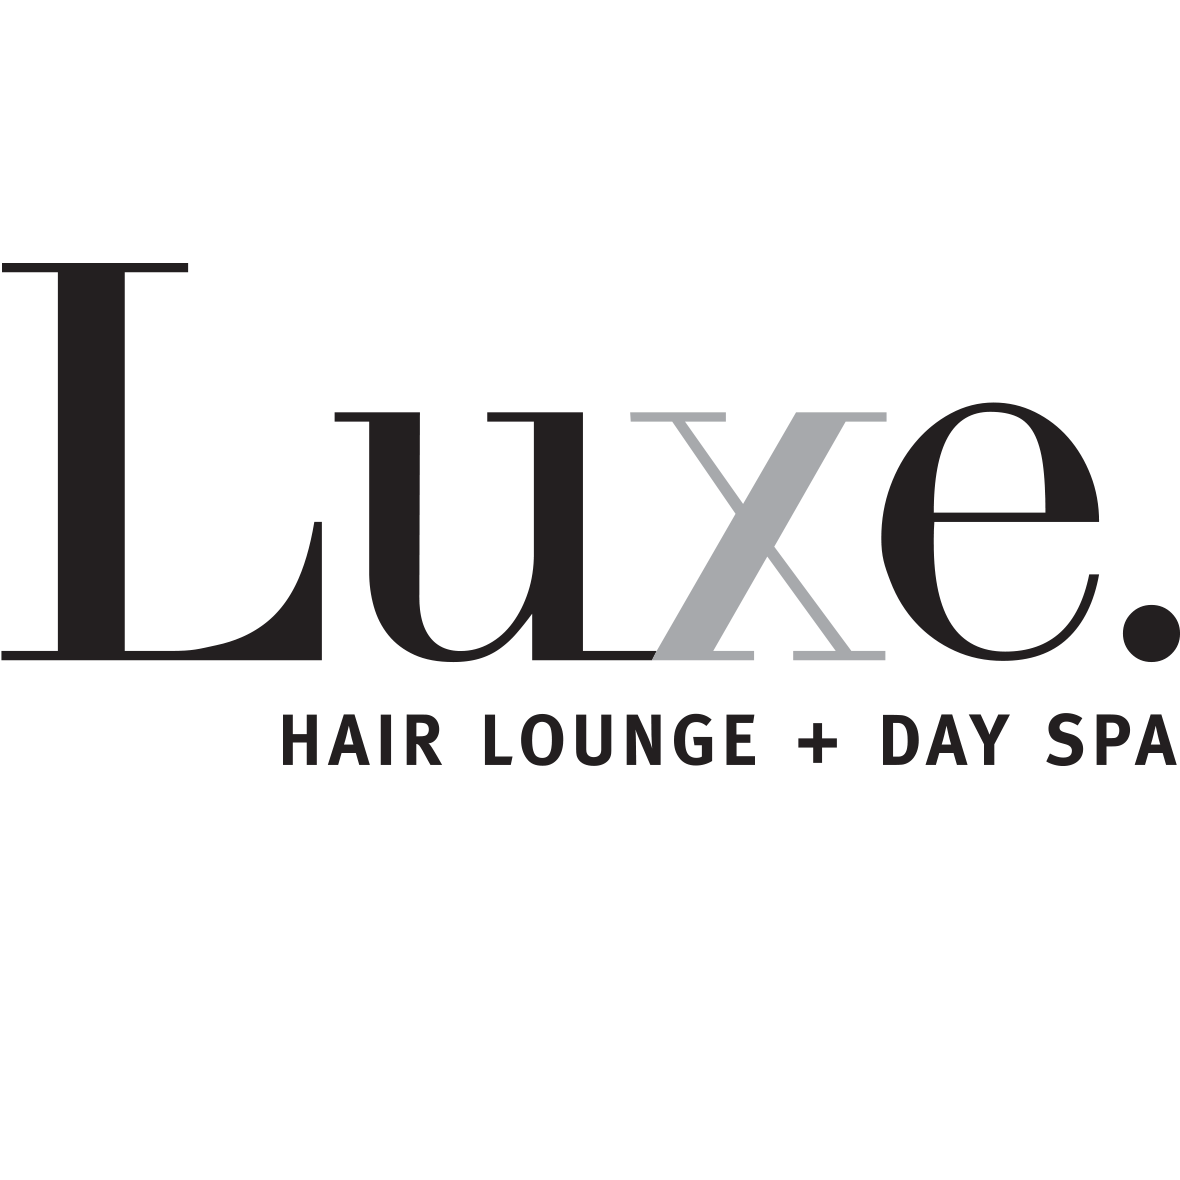 Luxe Hair Lounge & Day Spa - Sacramento, CA 95811 - (916)443-1400 | ShowMeLocal.com